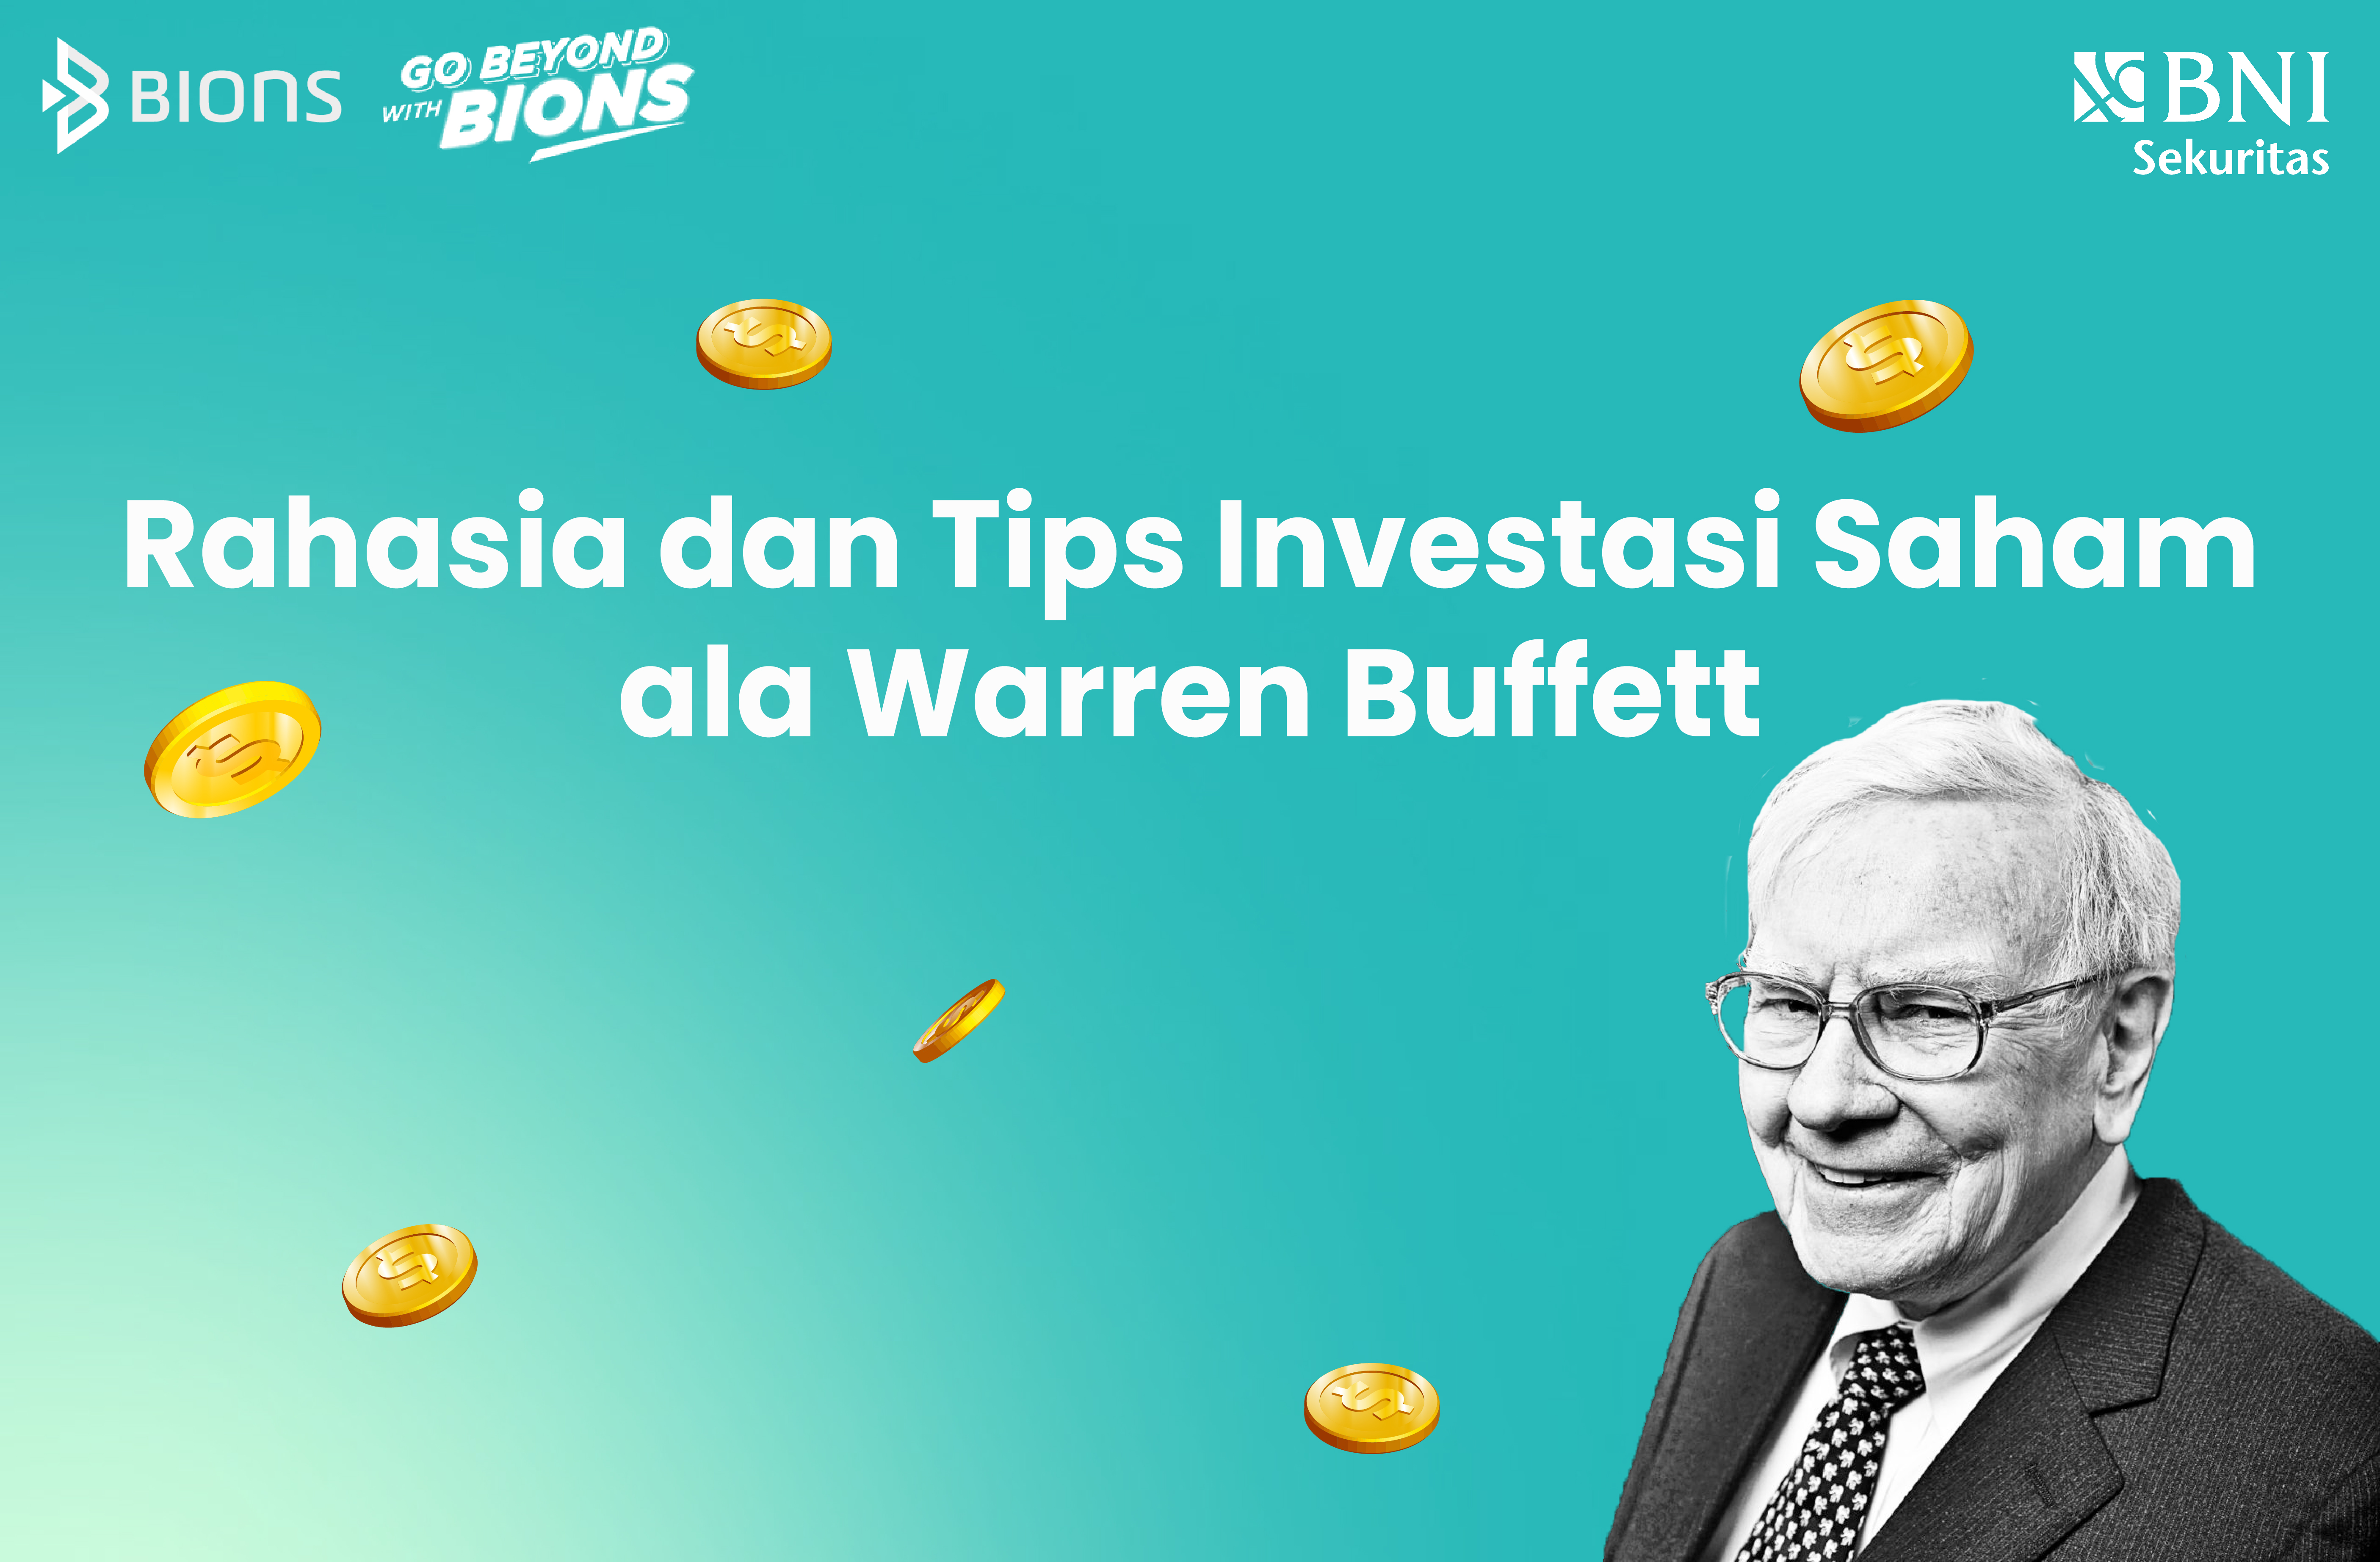 Rahasia dan Tips Investasi Saham Ala Warren Buffett